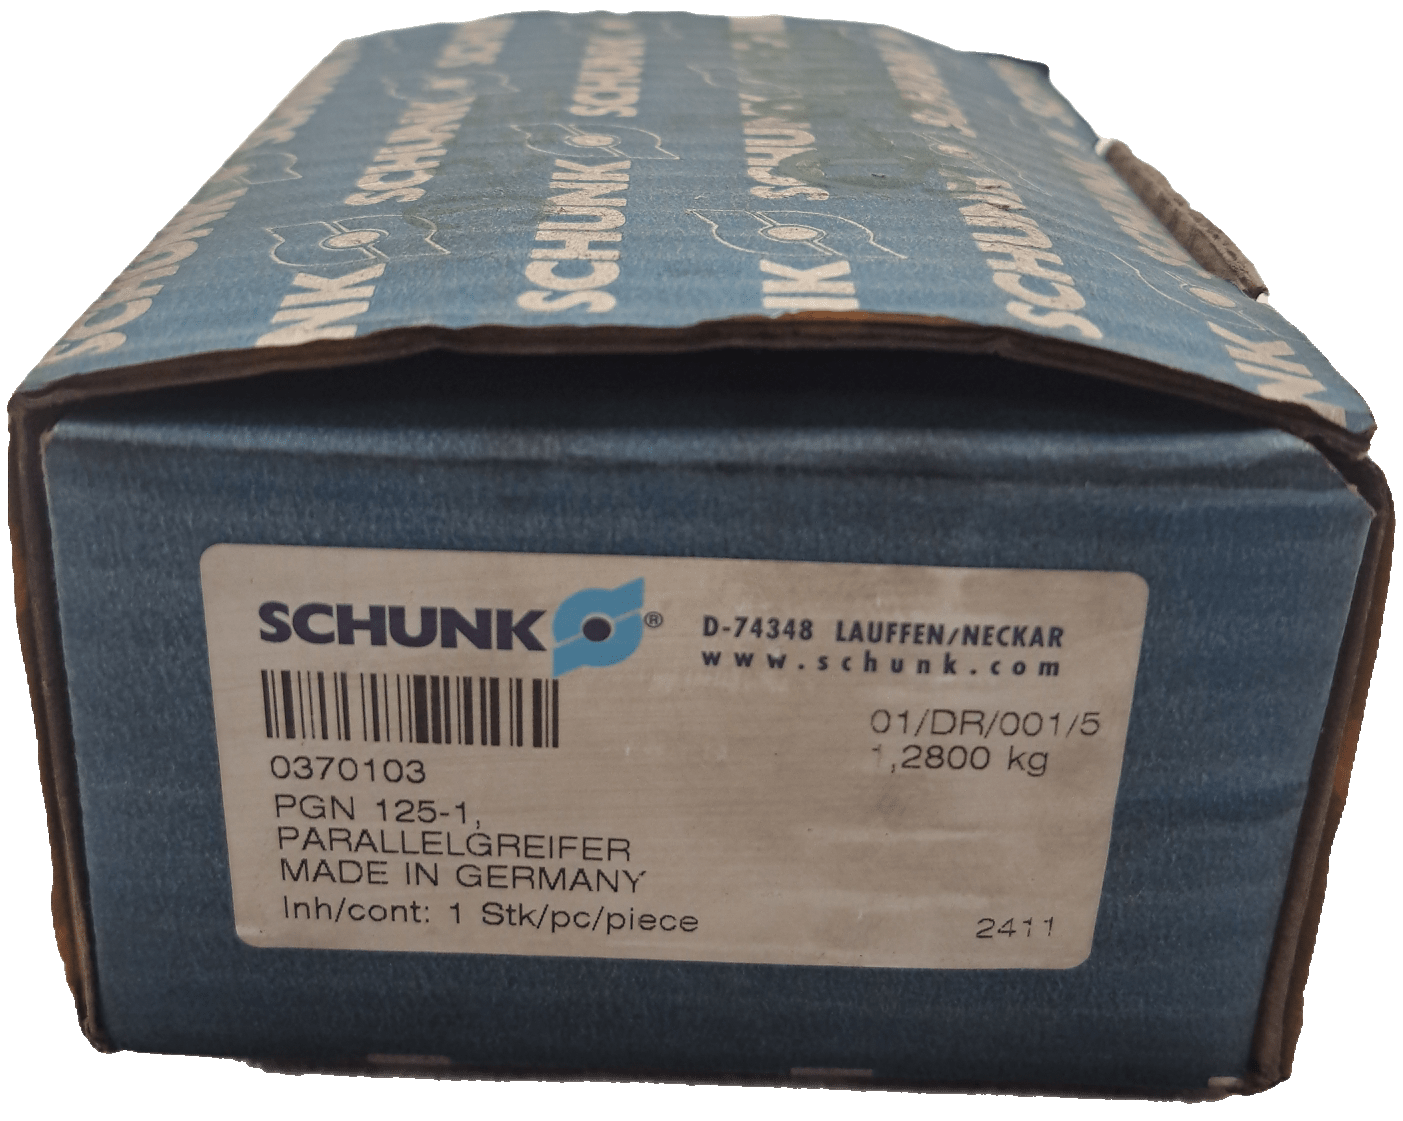 Schunk Universalgreifer PGN-125-1 370103 - #product_category# | Klenk Maschinenhandel